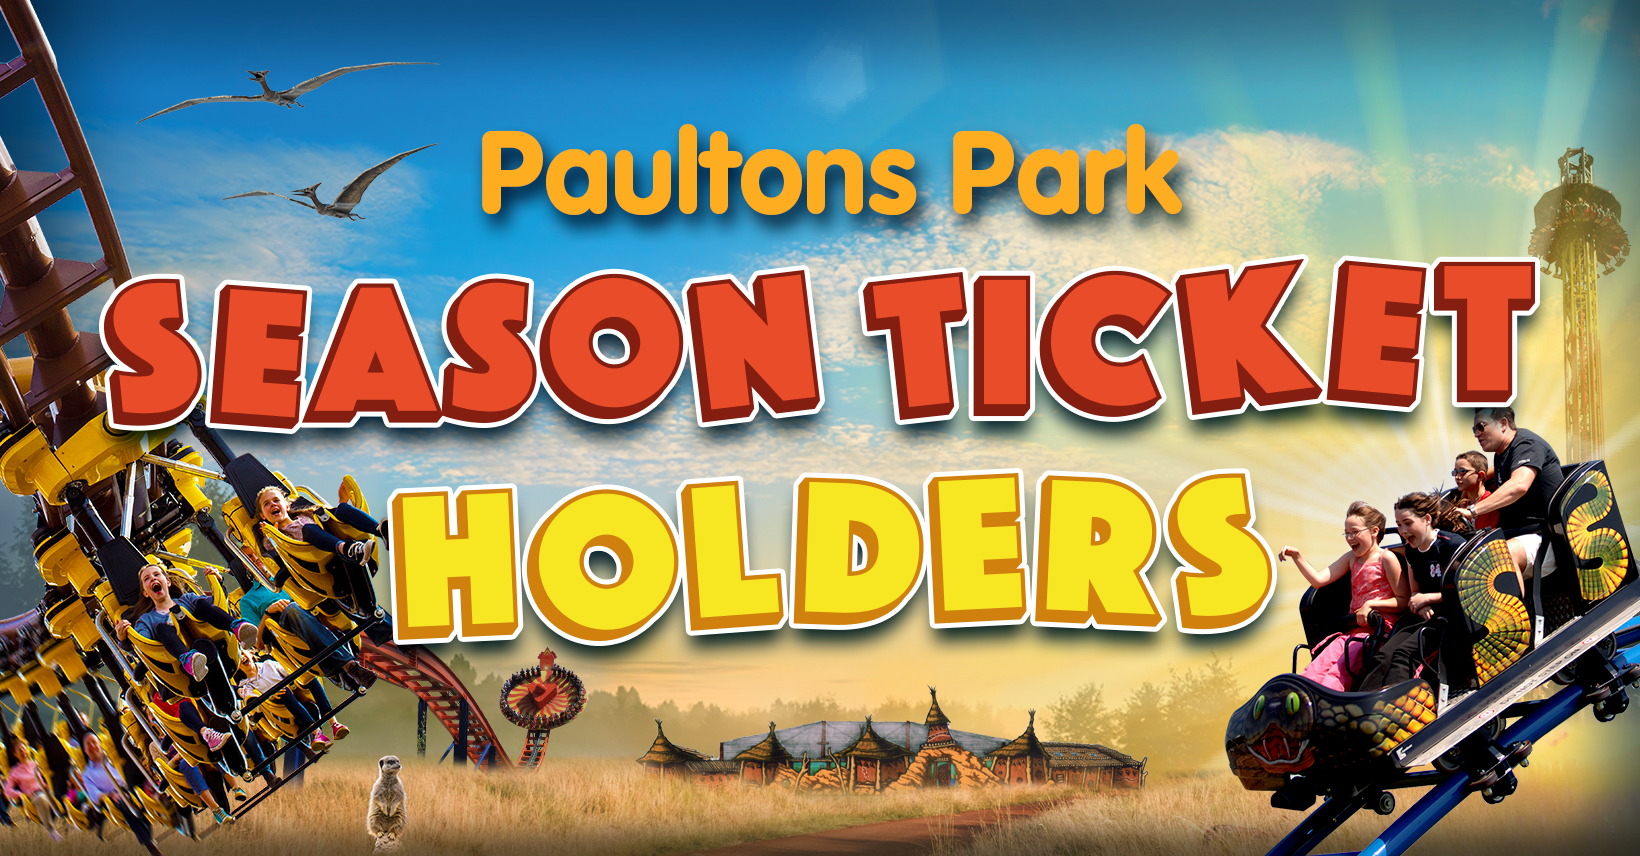 Paultons Park season ticket holders